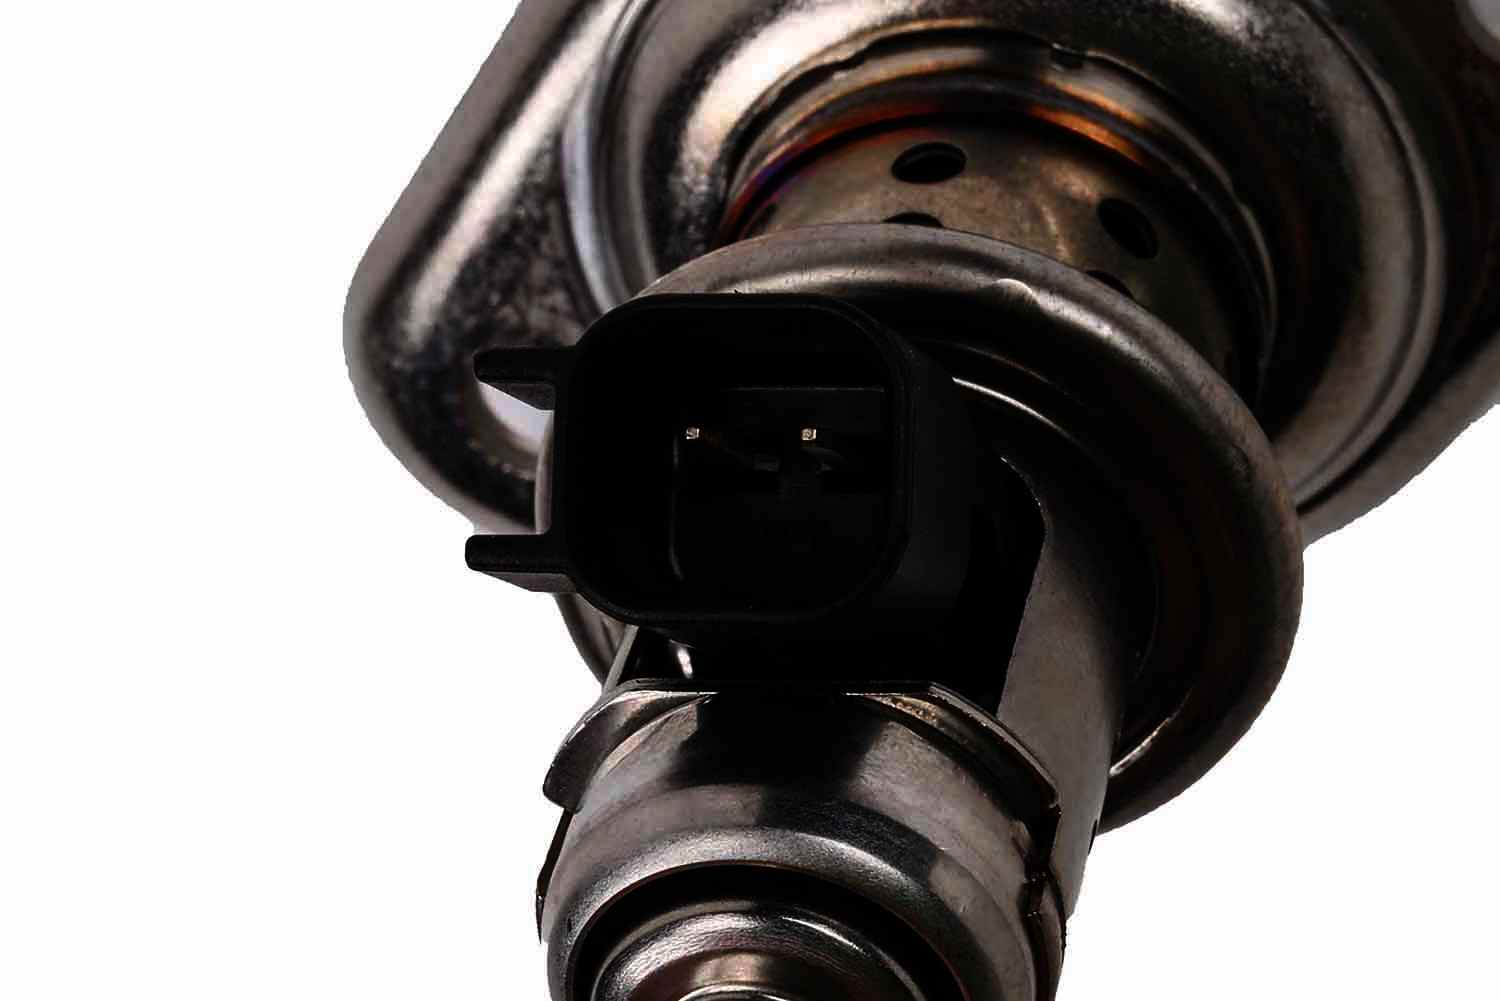 GM GENUINE PARTS - Diesel Exhaust Fluid (DEF) Injection Nozzle - GMP 55504303